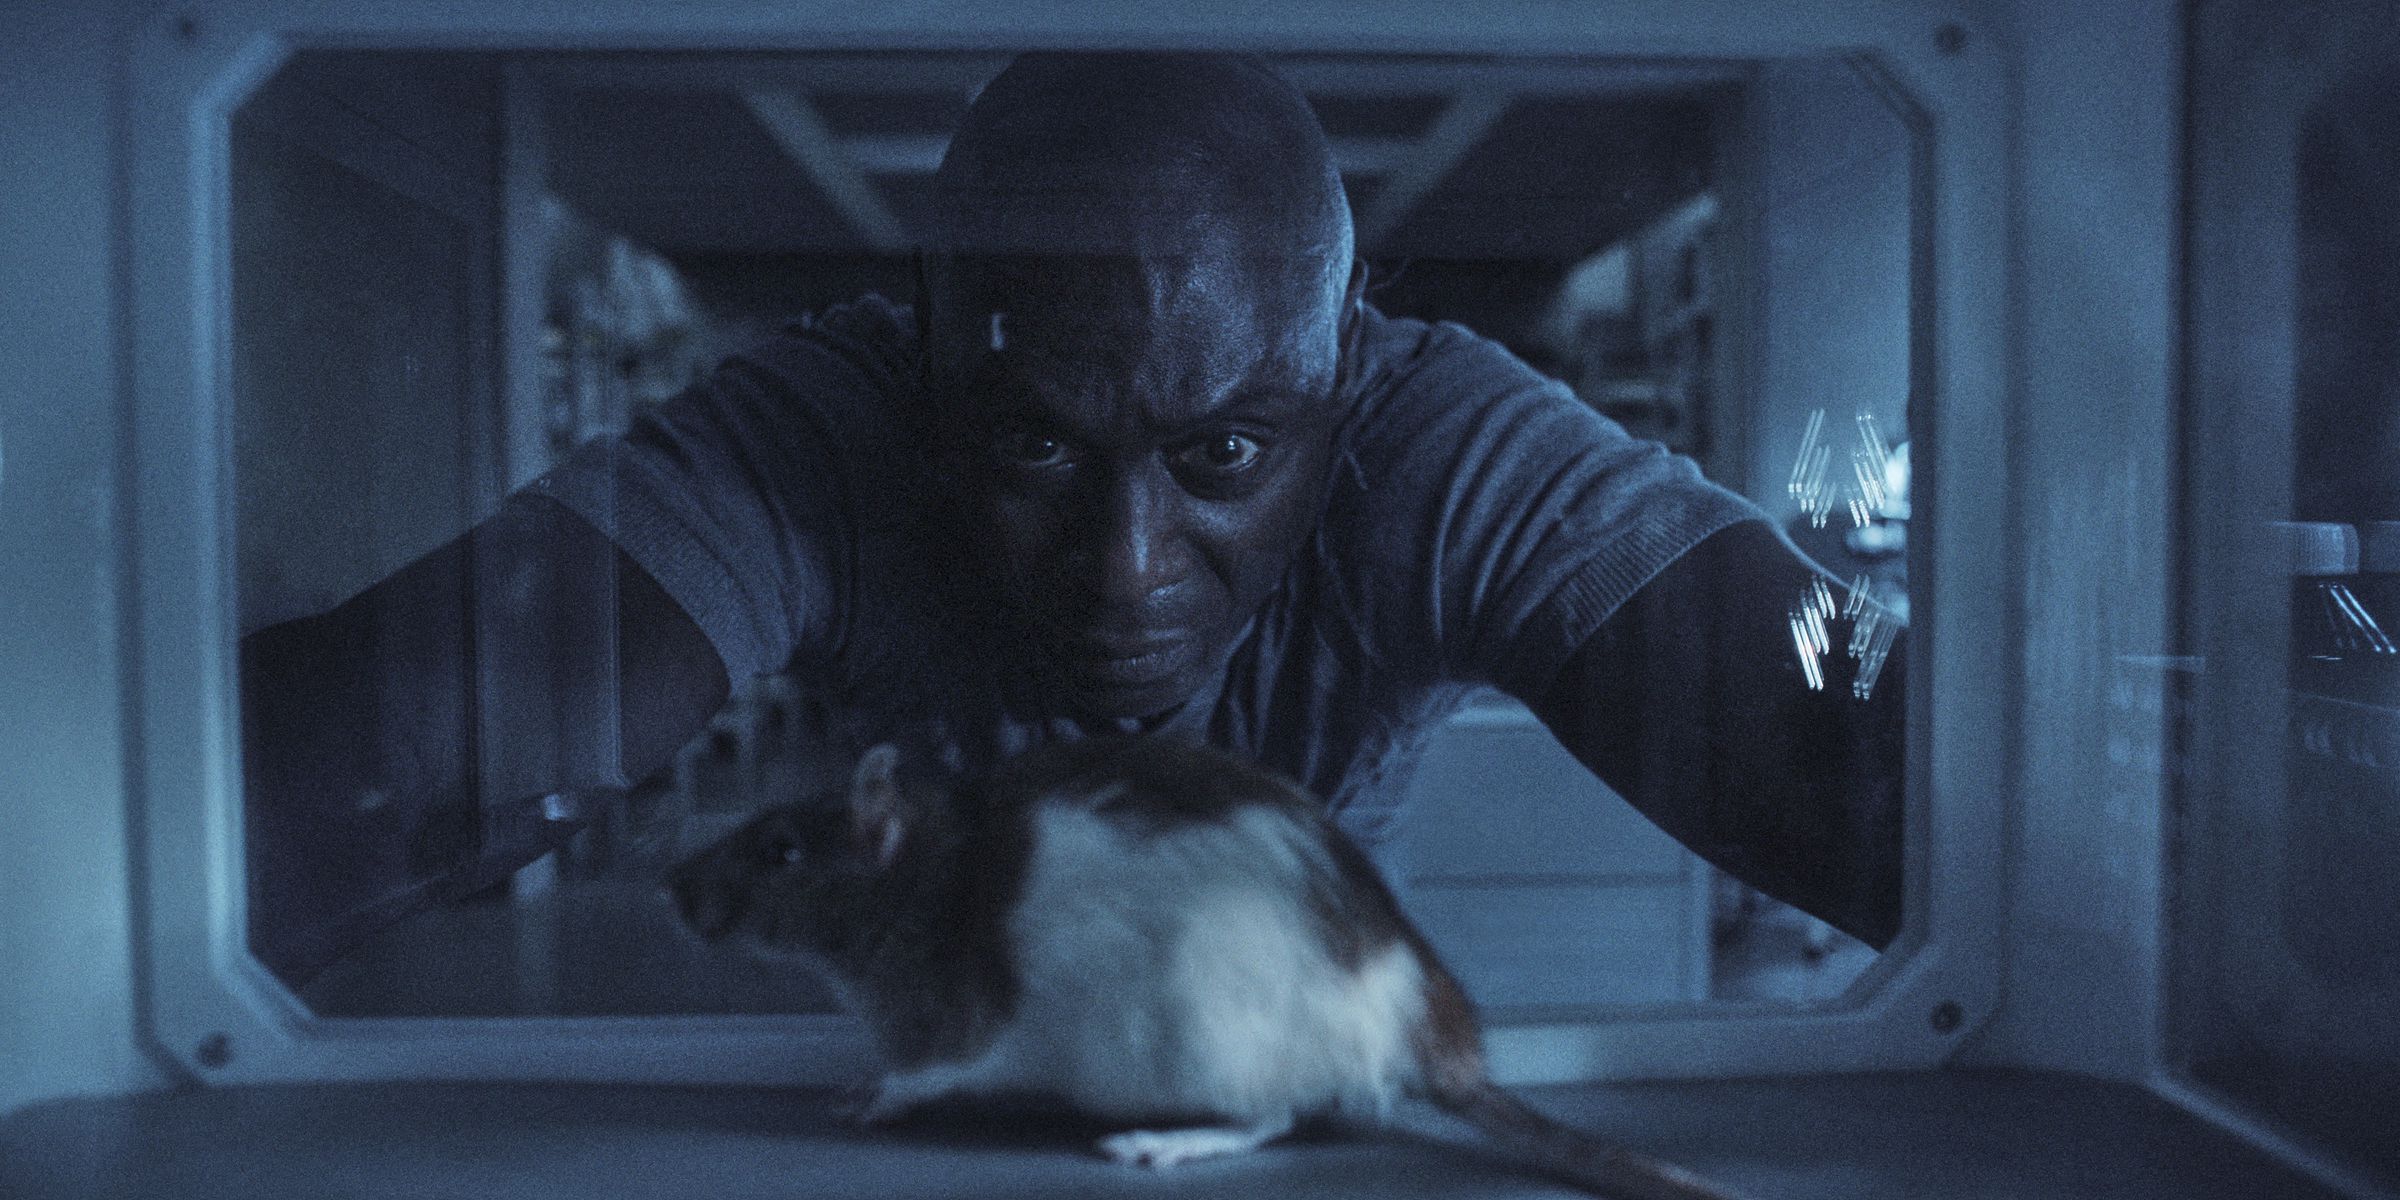 Albert Wesker gazing at a lab rat